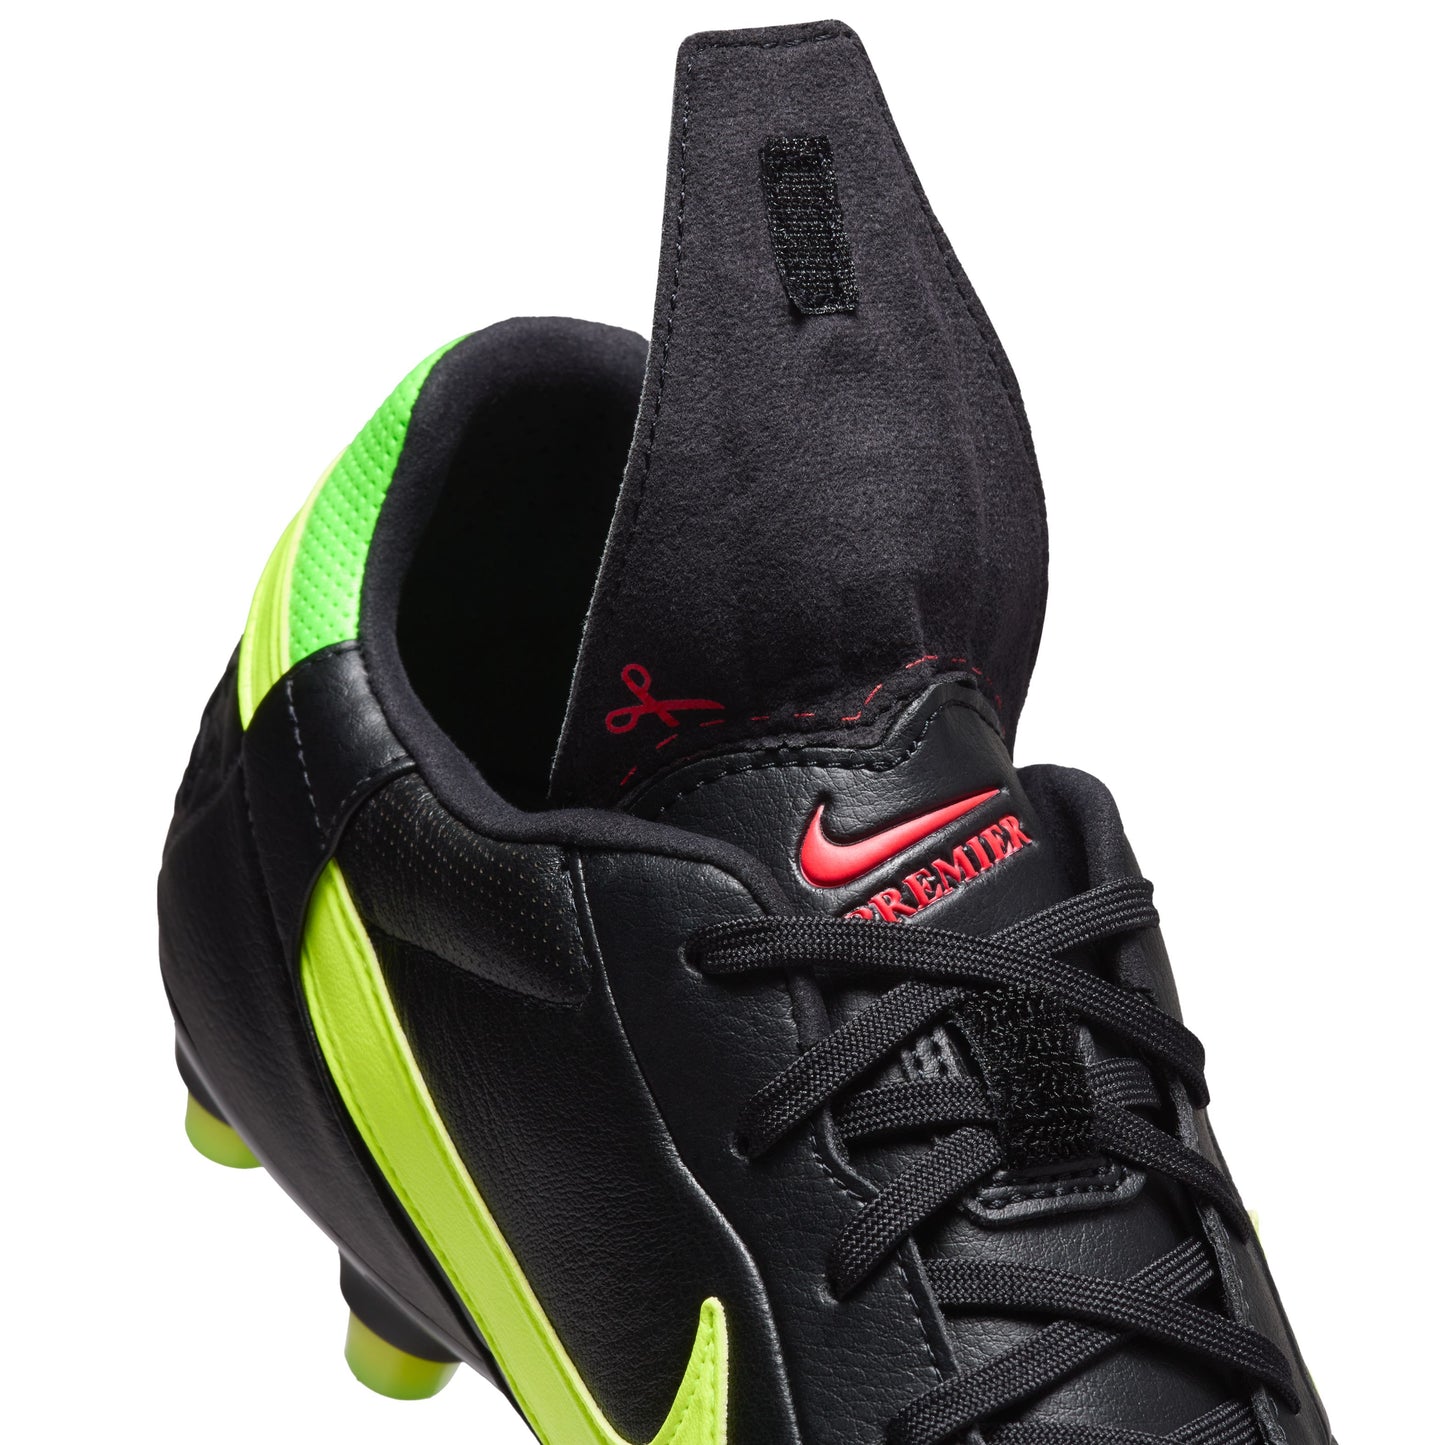 Nike Premier 3 FG Soccer Cleats Black Volt